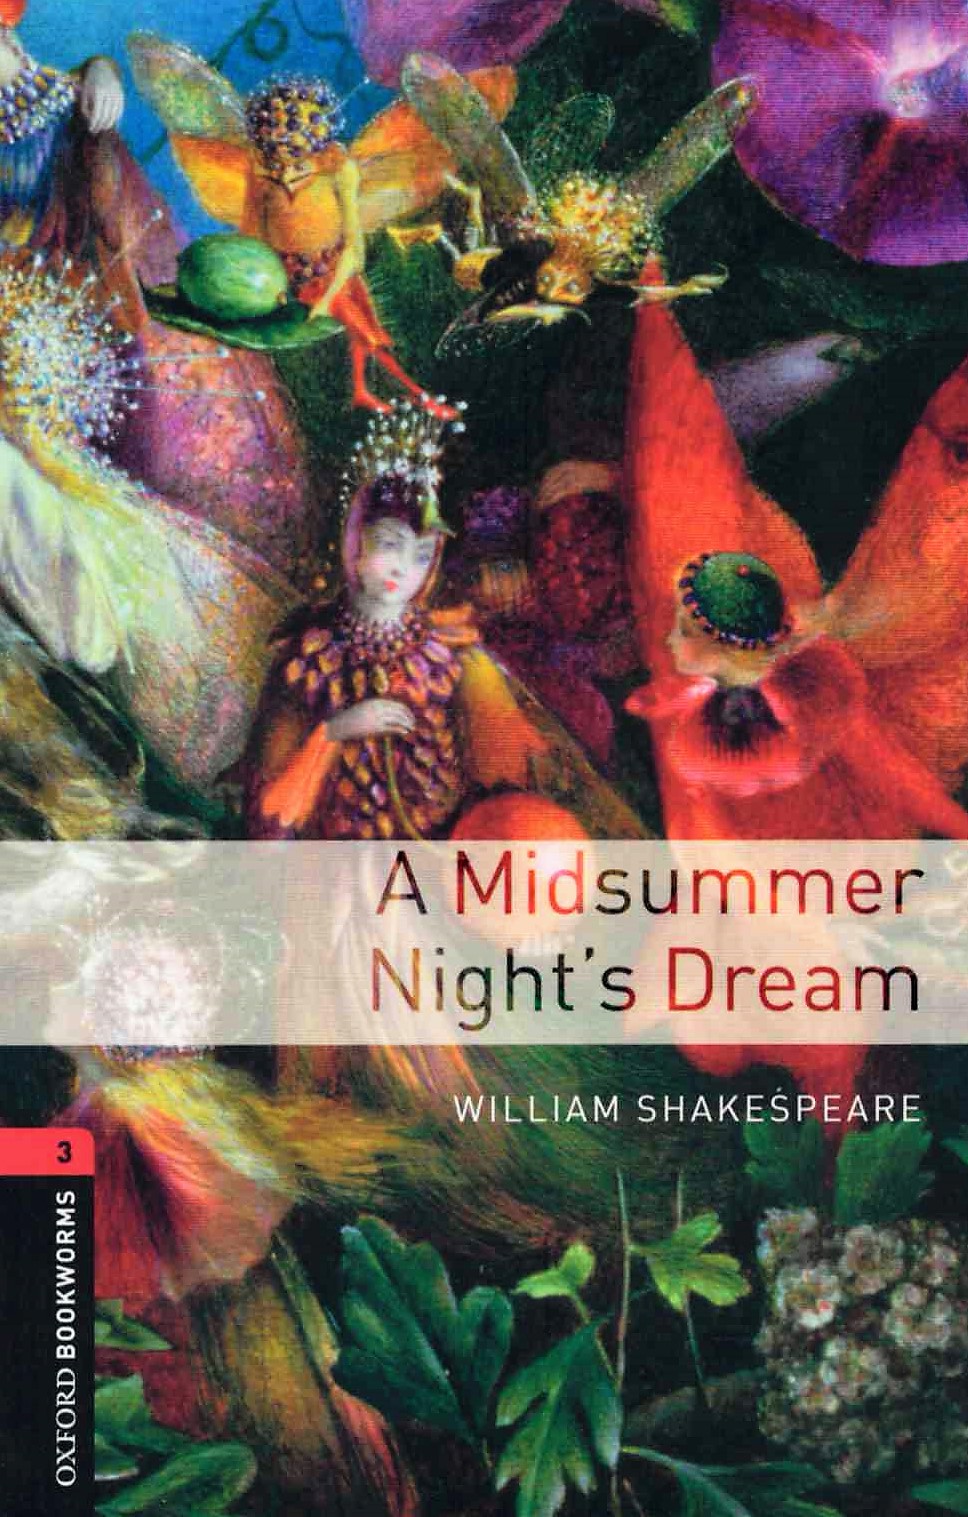 Oxford Bookworms: A Midsummer Night's Dream